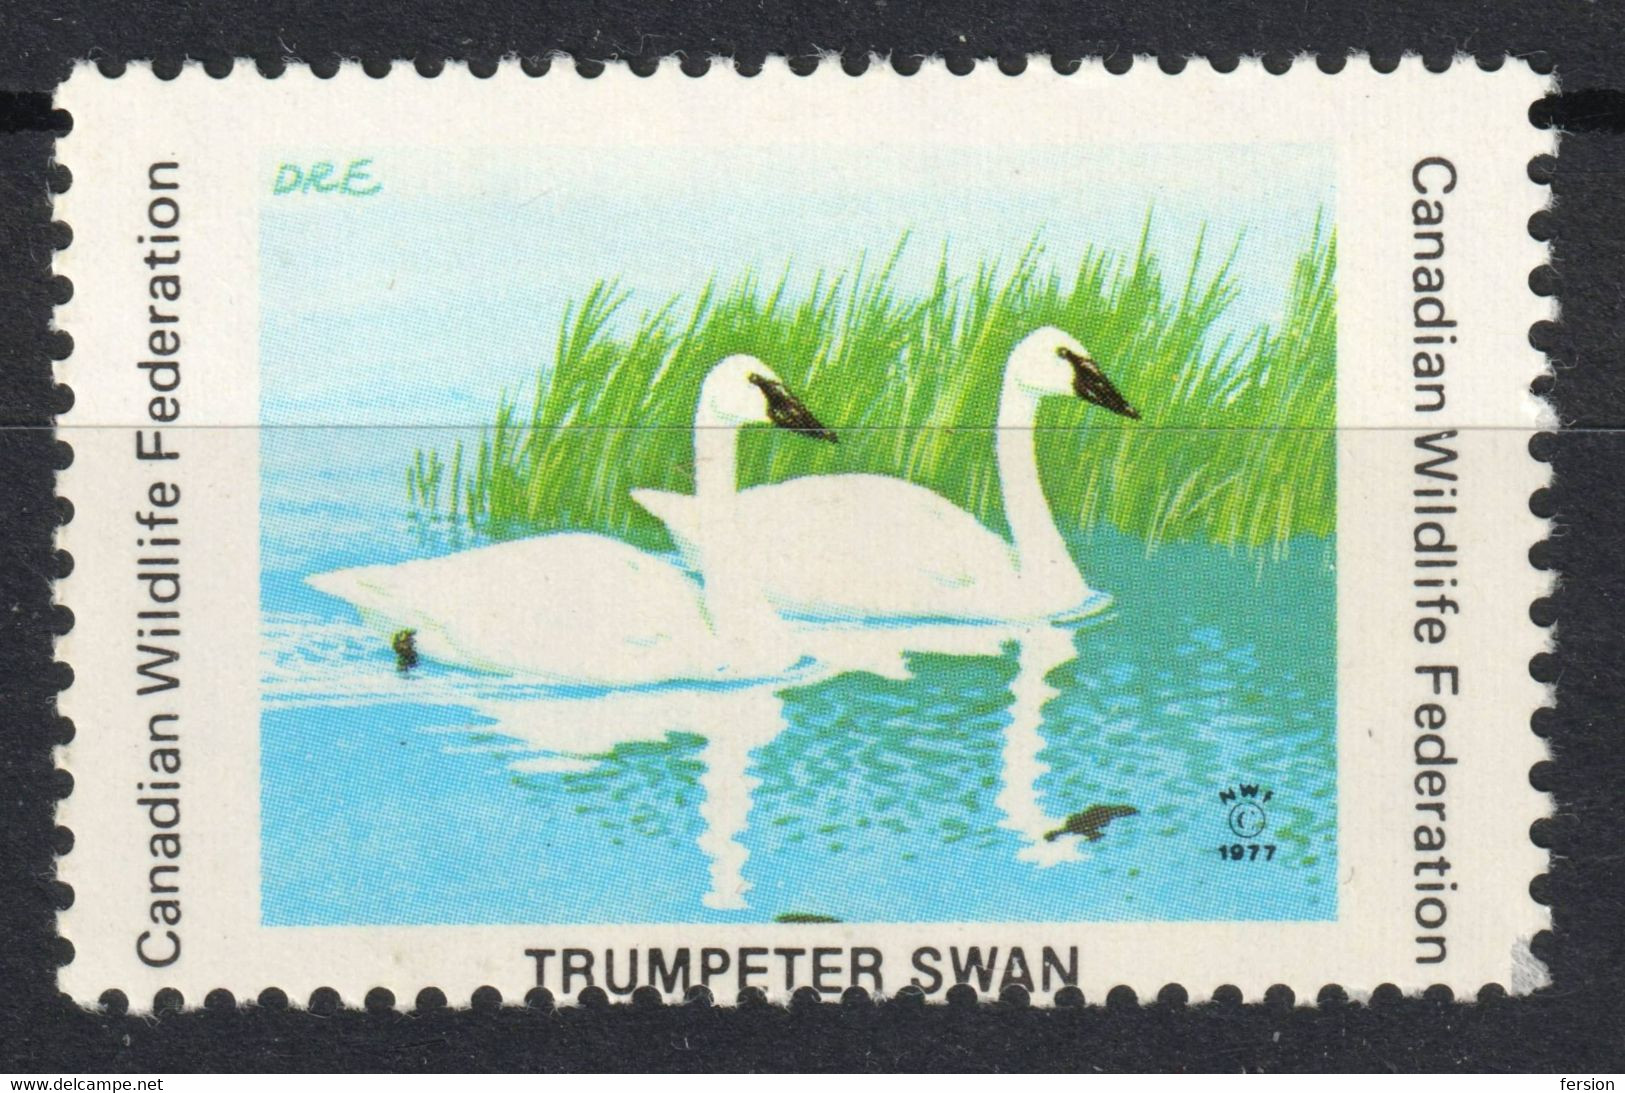 SWAN Trumpeter Bird - Canadian Wildlife Federation 1977 CANADA Charity LABEL CINDERELLA VIGNETTE - Cygnes